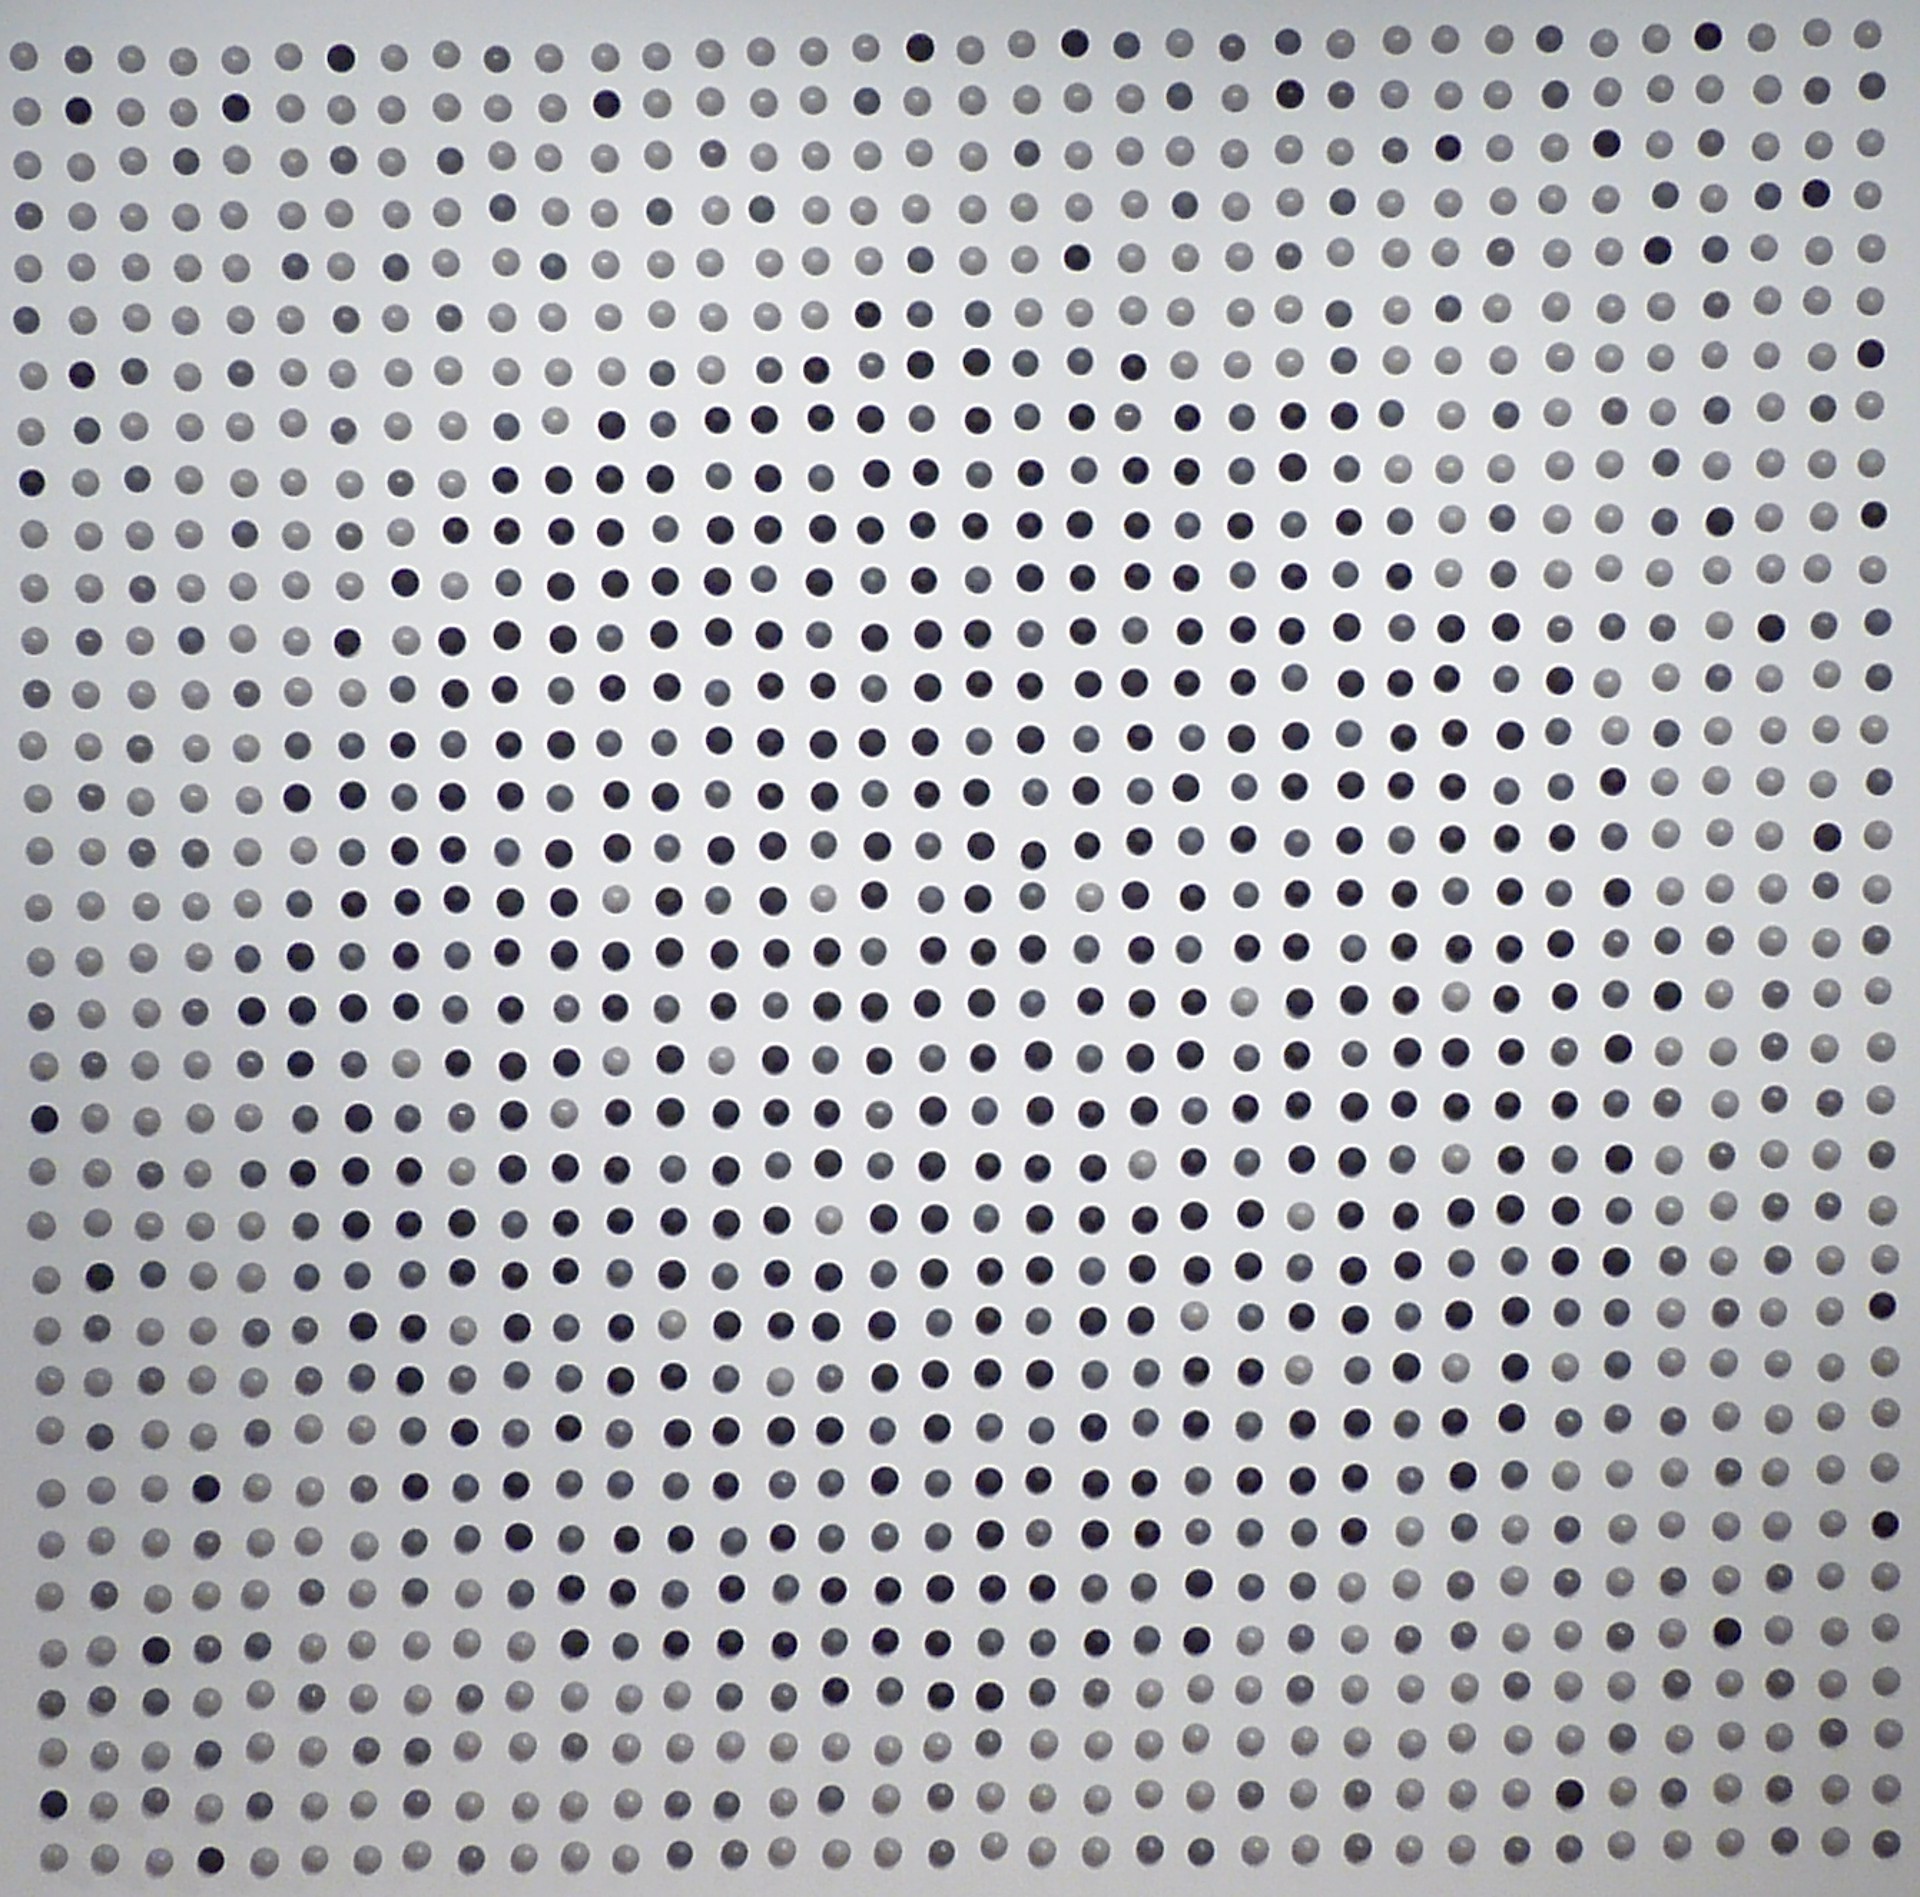 Quantum Dots by Josh Van Stippen